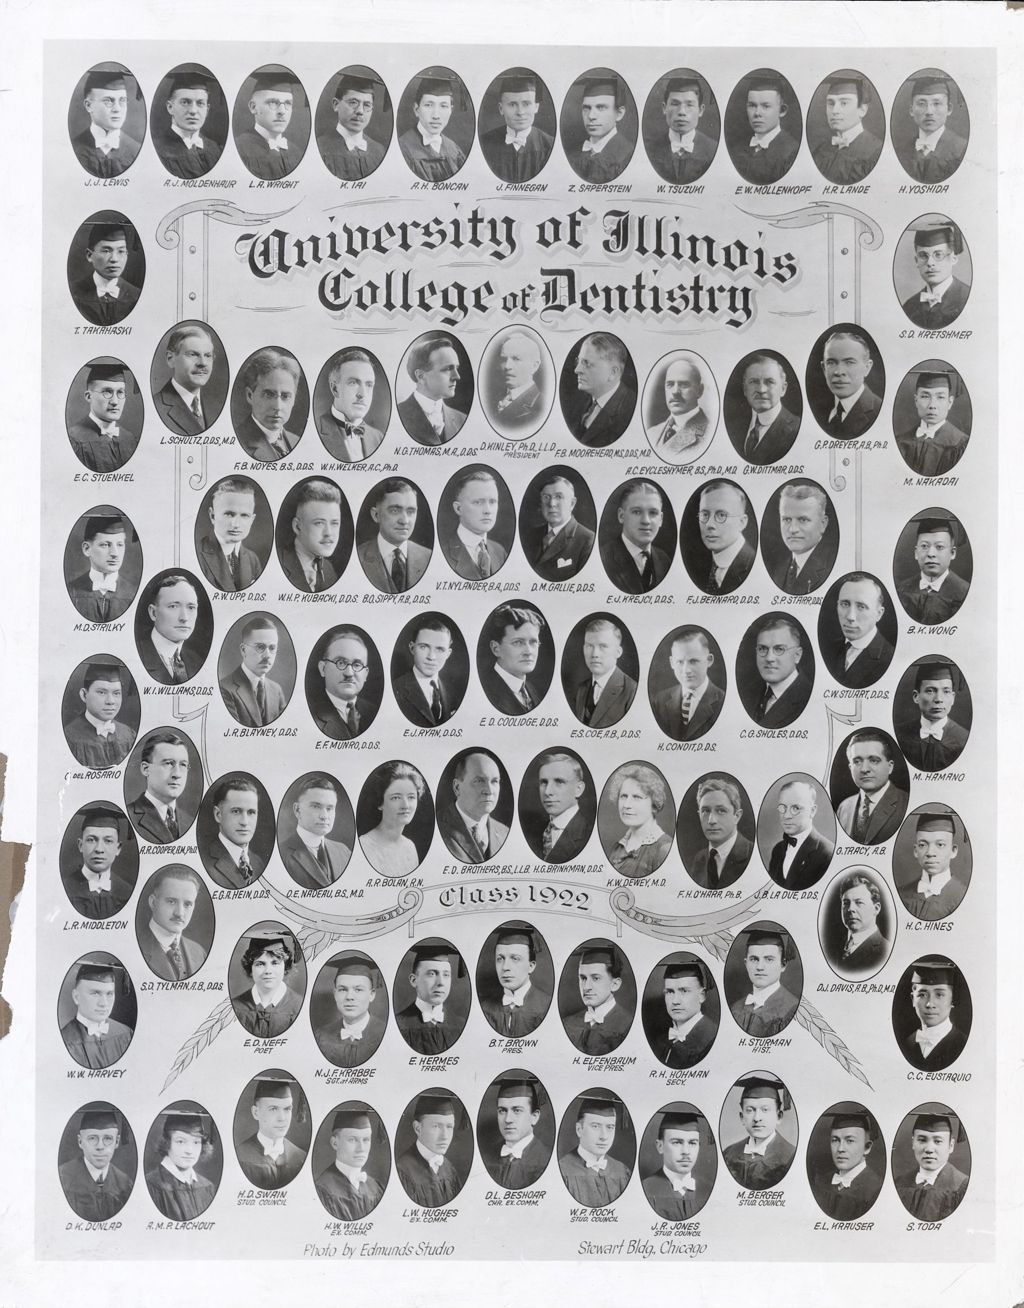 1922 graduating class, University of Illinois College of Dentistry